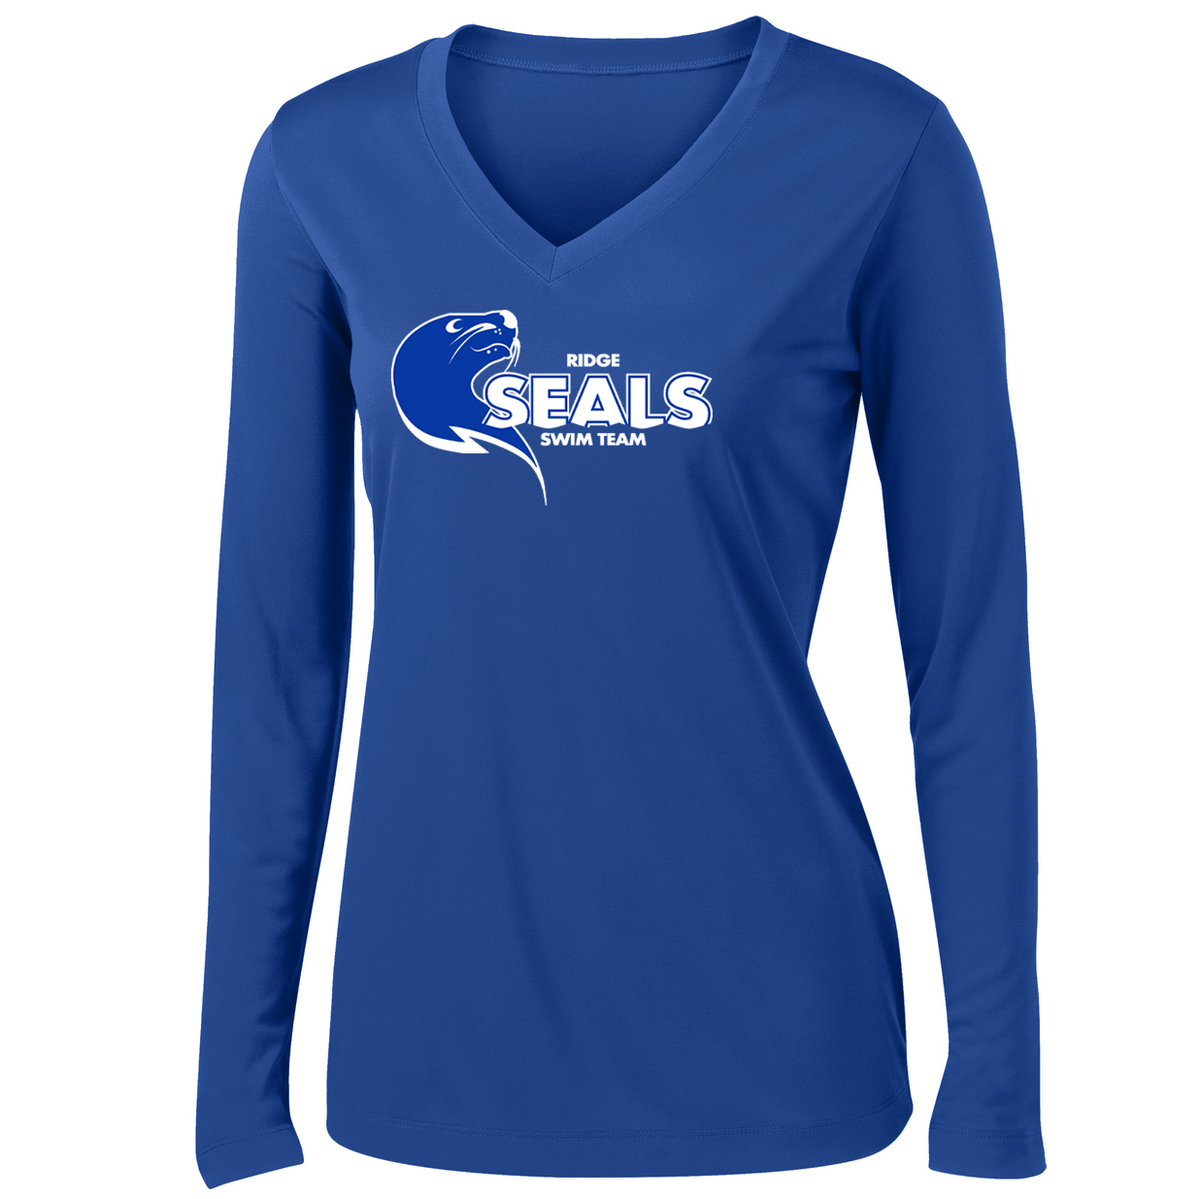 Ridge Seals Swim Team Women's Long Sleeve Performance Shirt